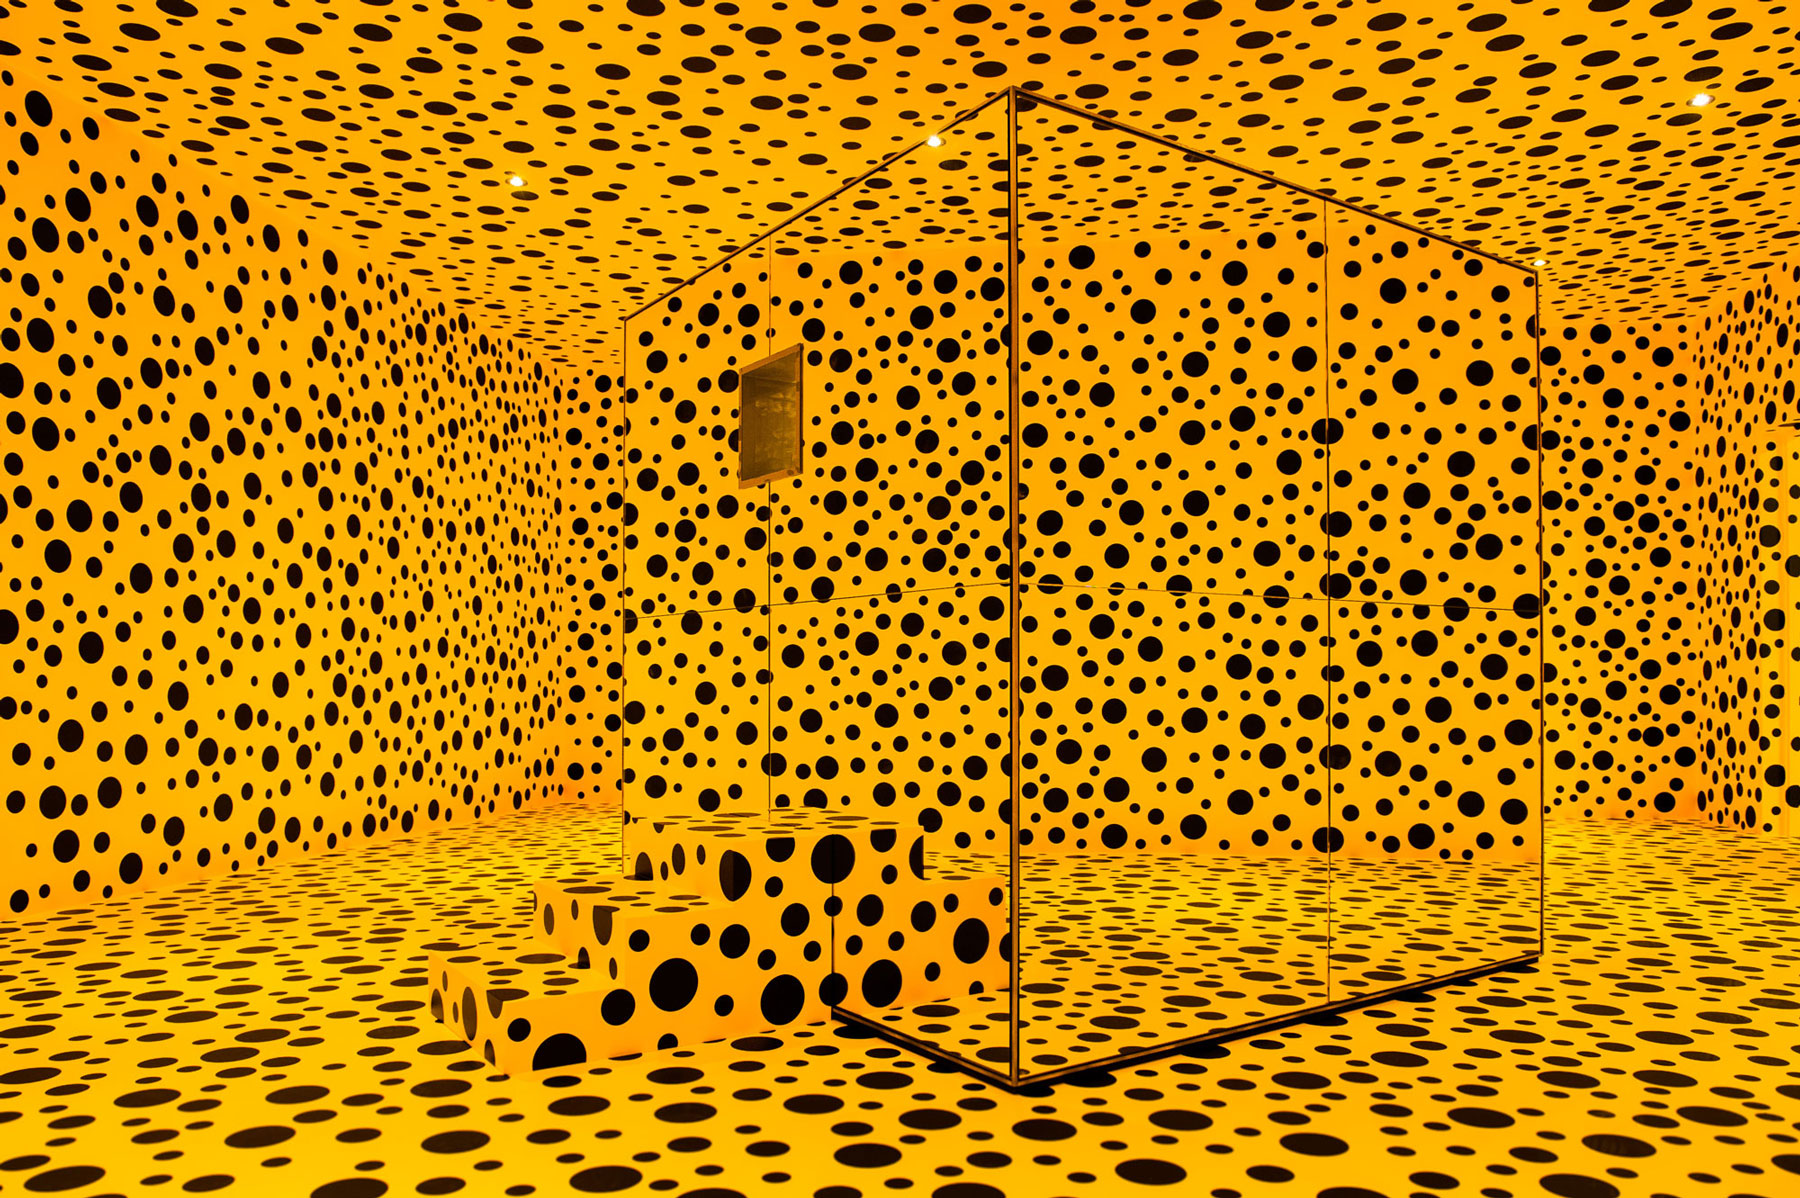 Yayoi Kusama In Infinity louisiana museum of modern art